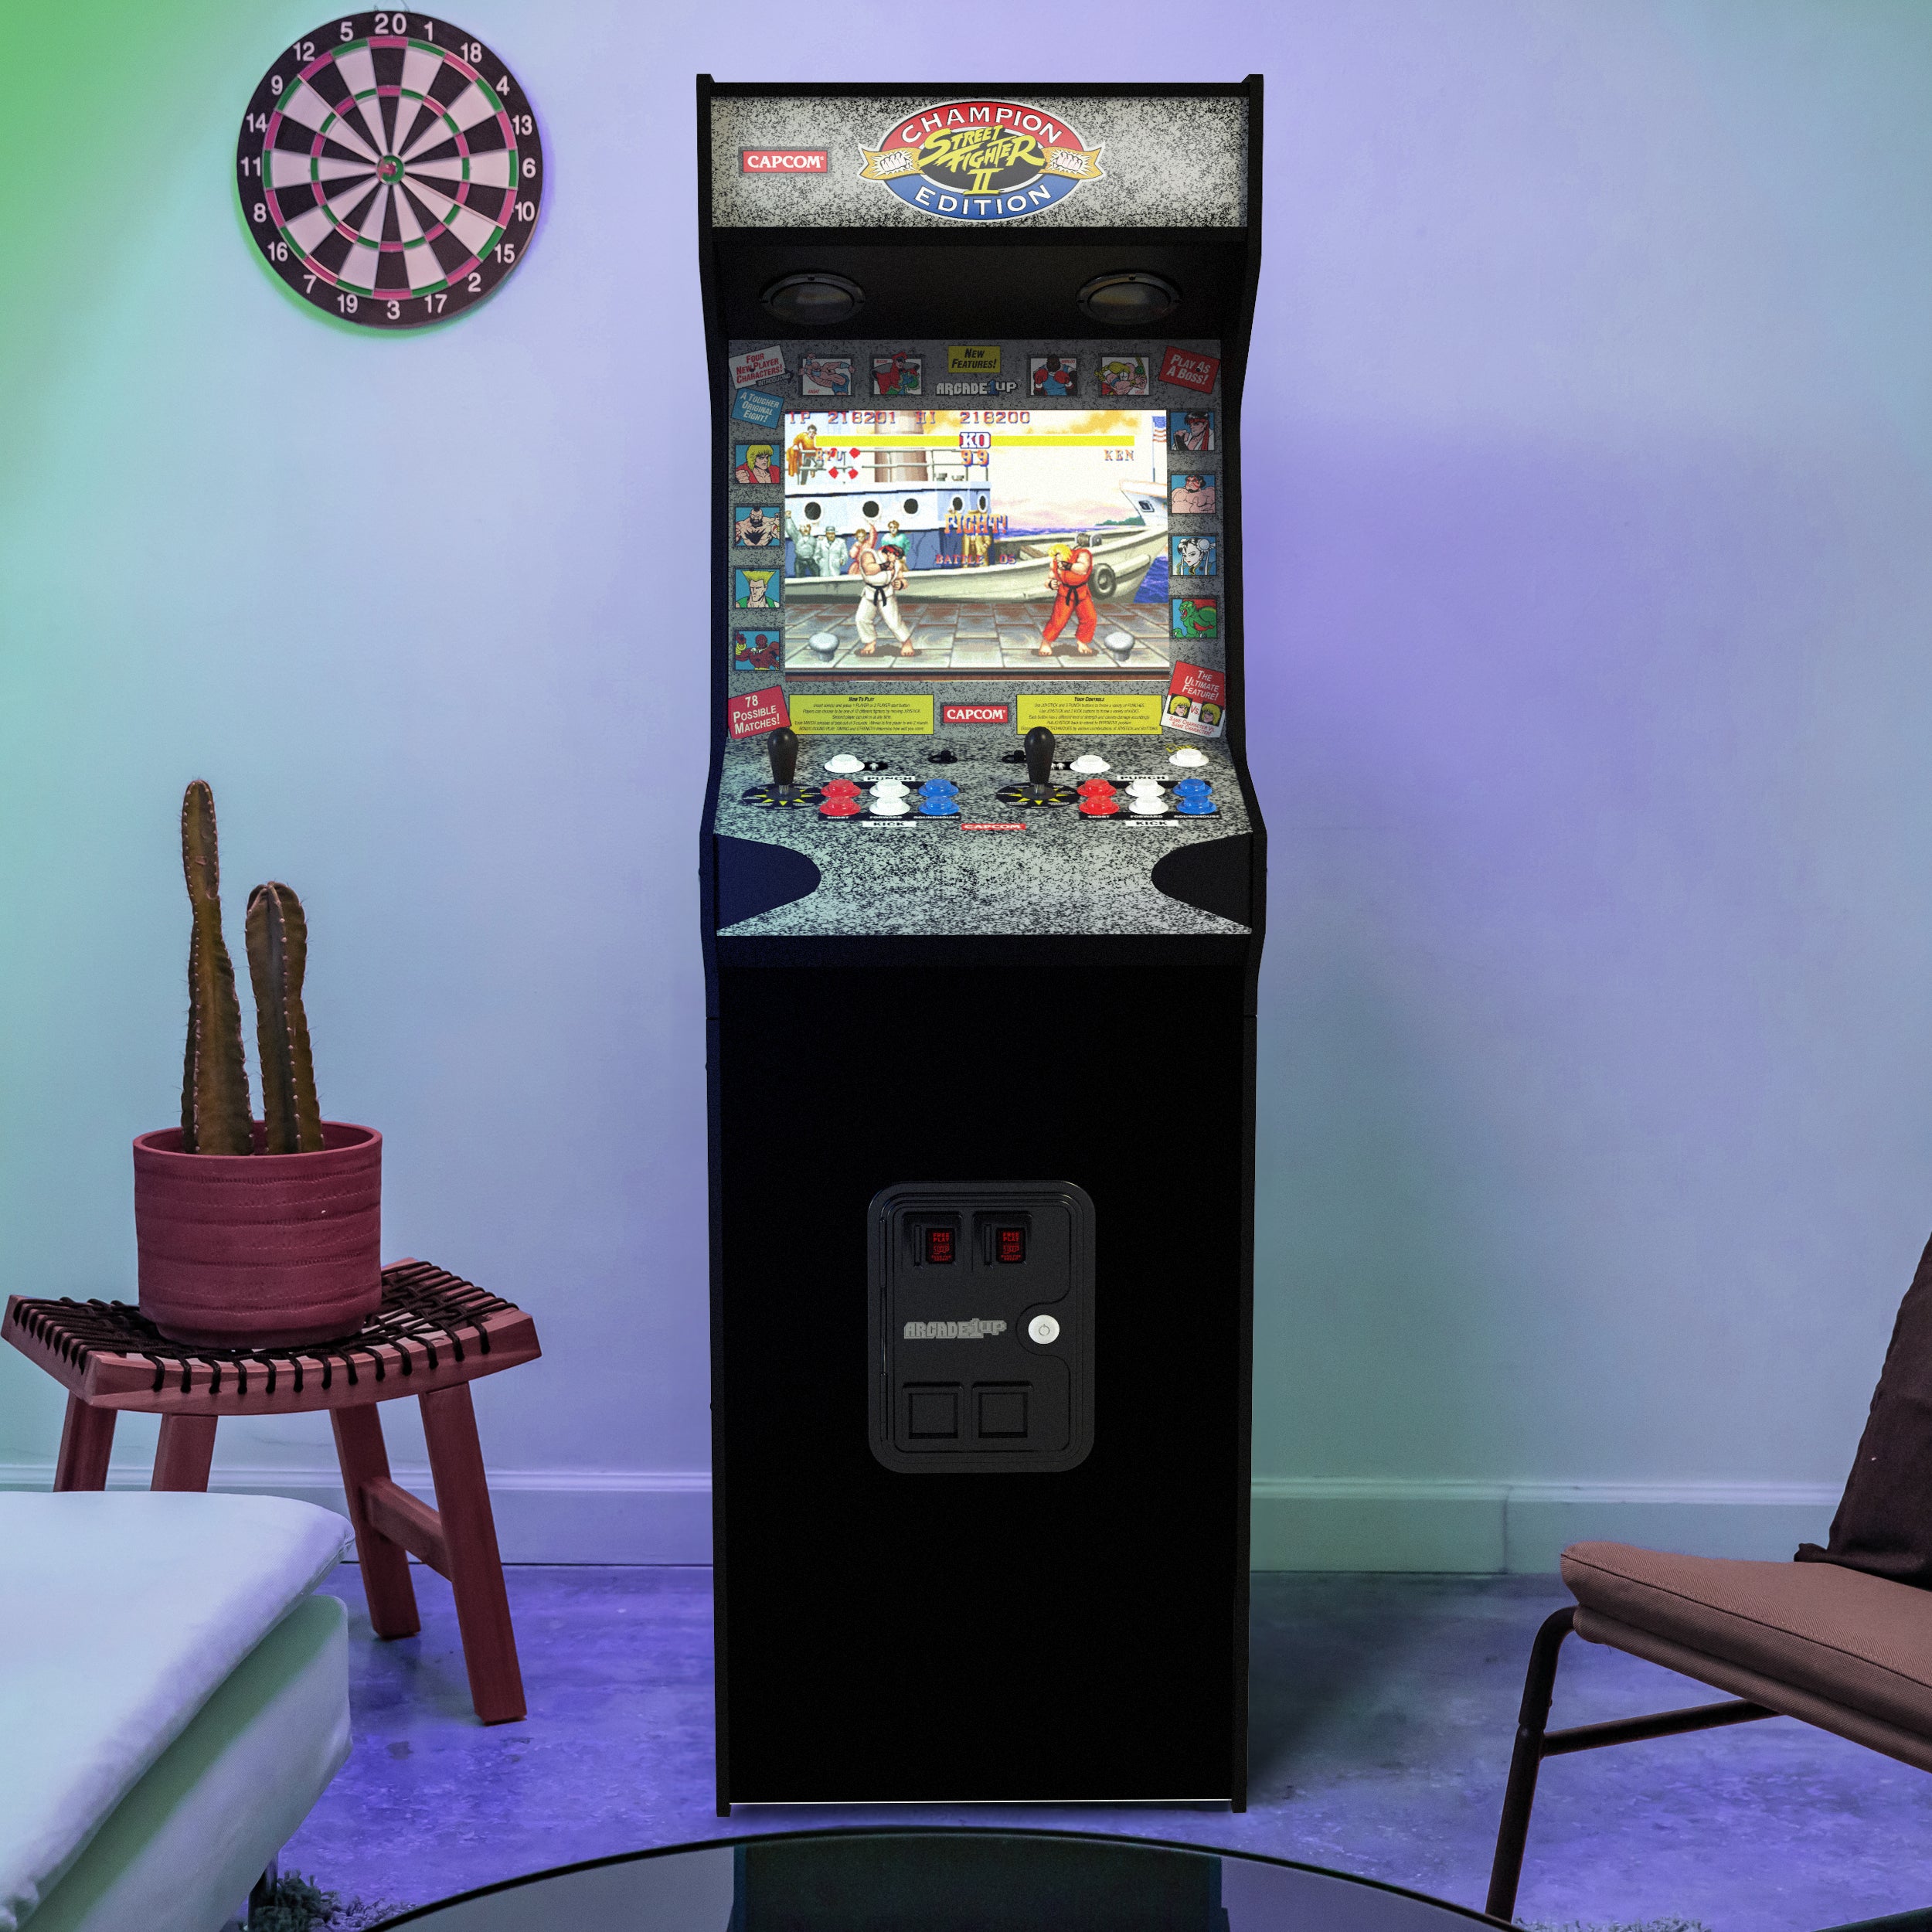 Arcade1Up Street Fighter™ II: CHAMPION EDITION HS-5 Deluxe Arcade Machine